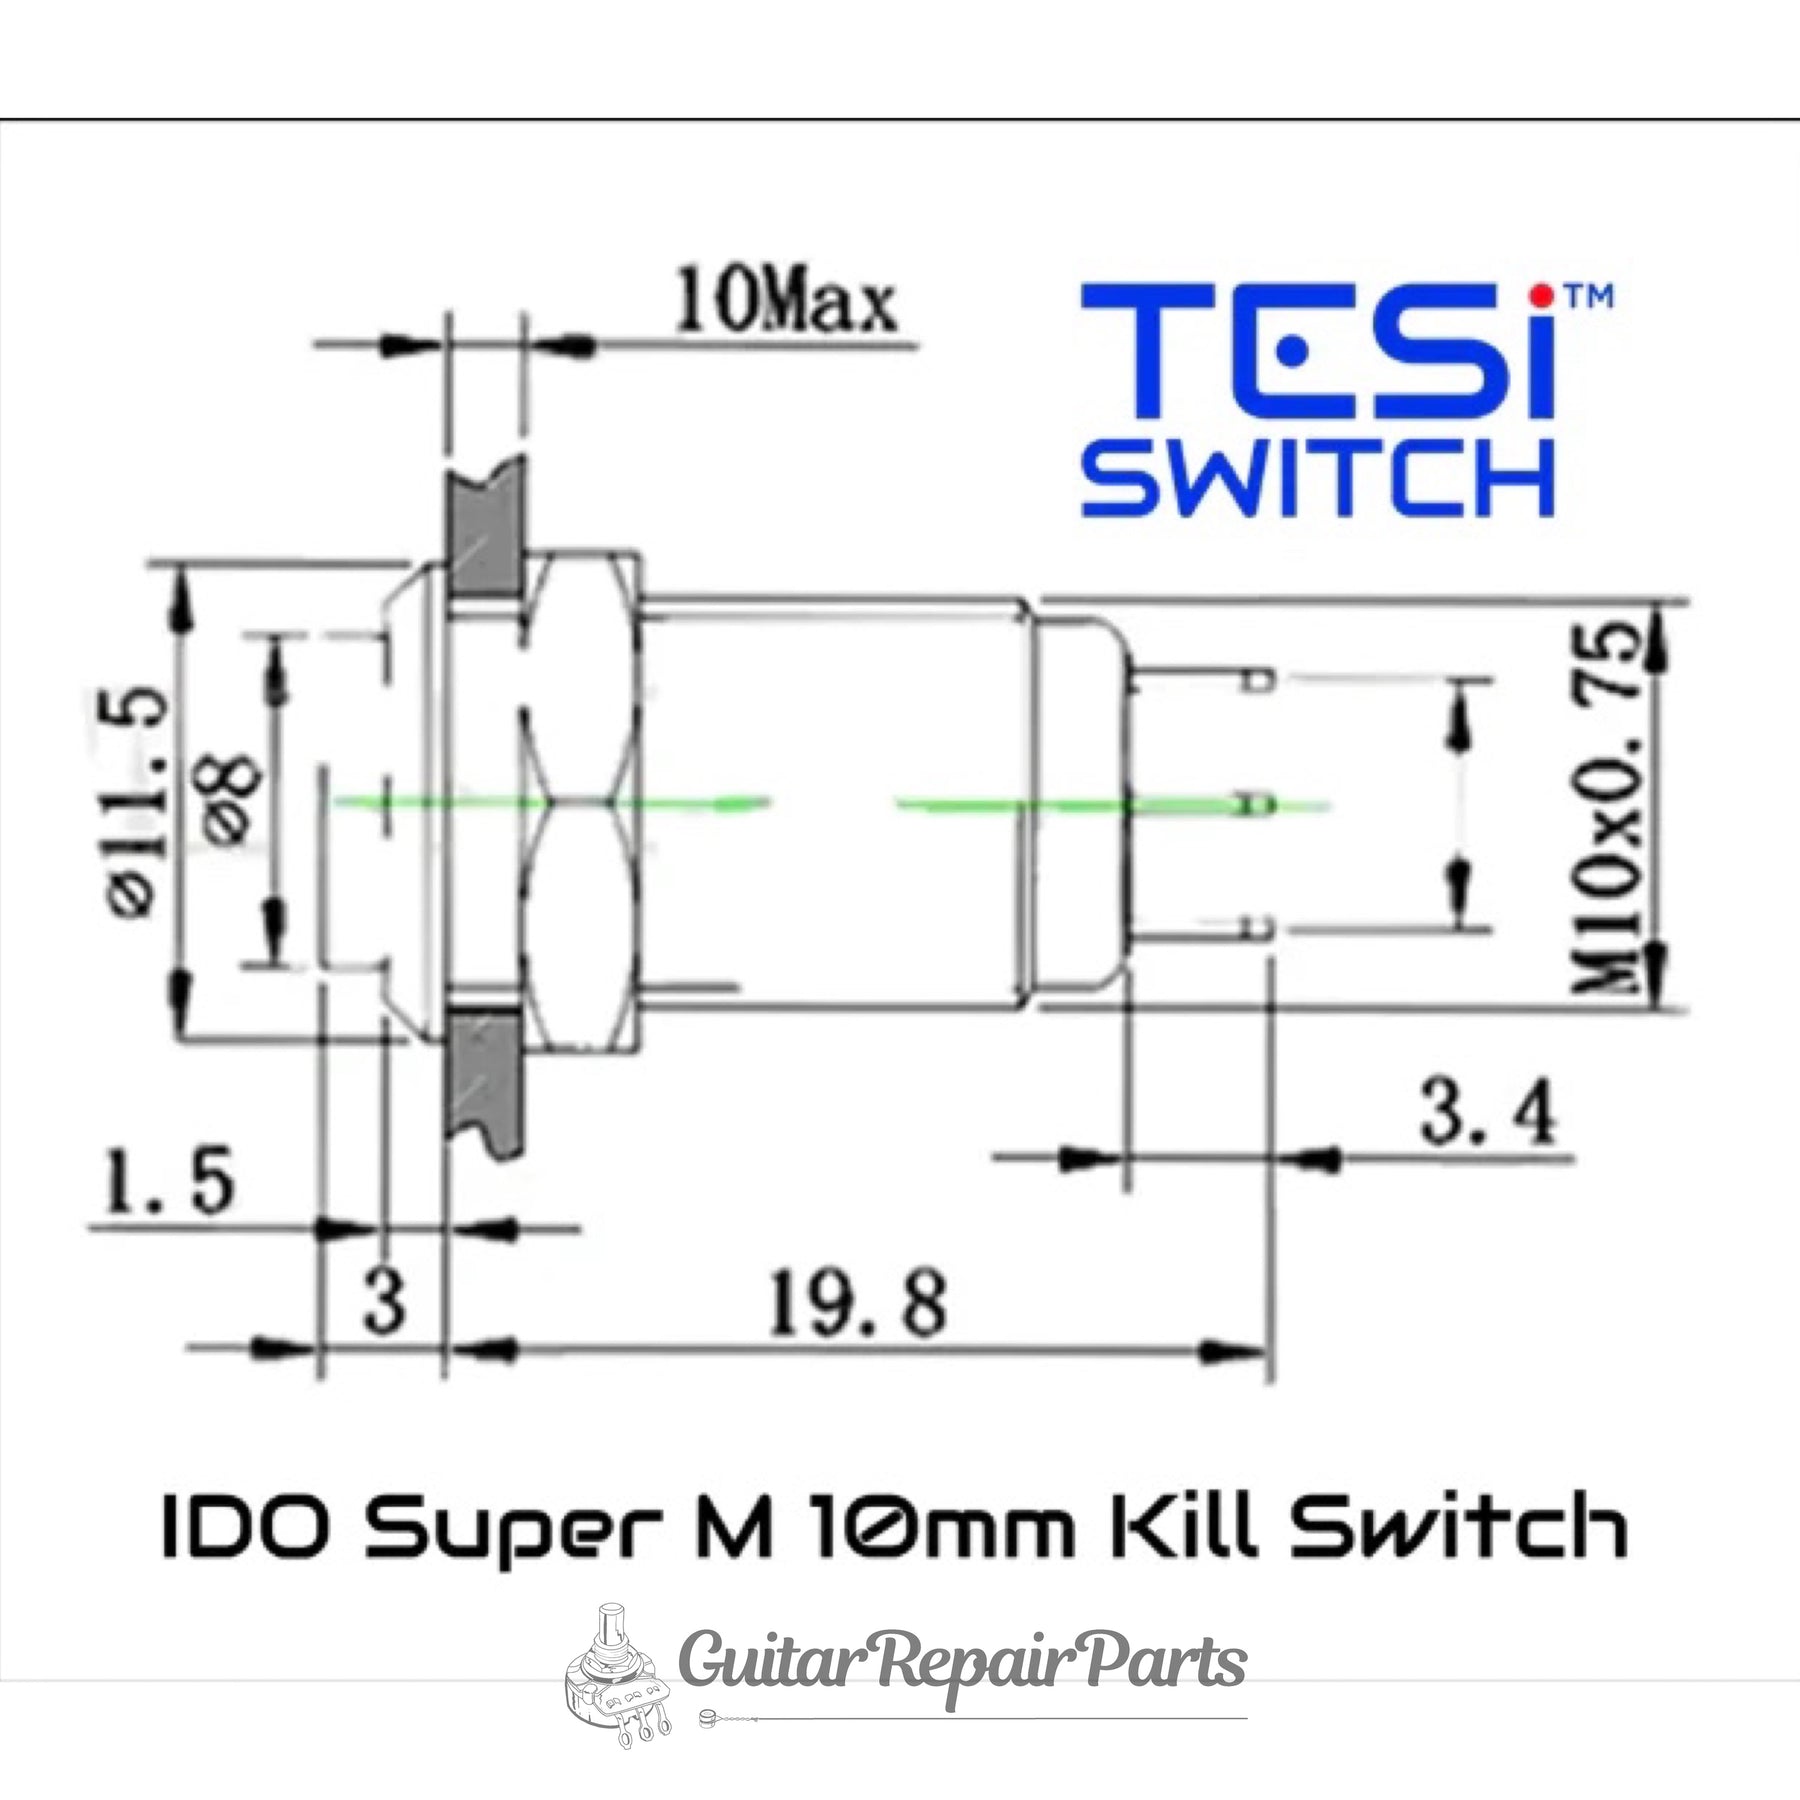 Tesi IDO Super M 10MM Metal Momentary Push Button Guitar Kill Switch - Black